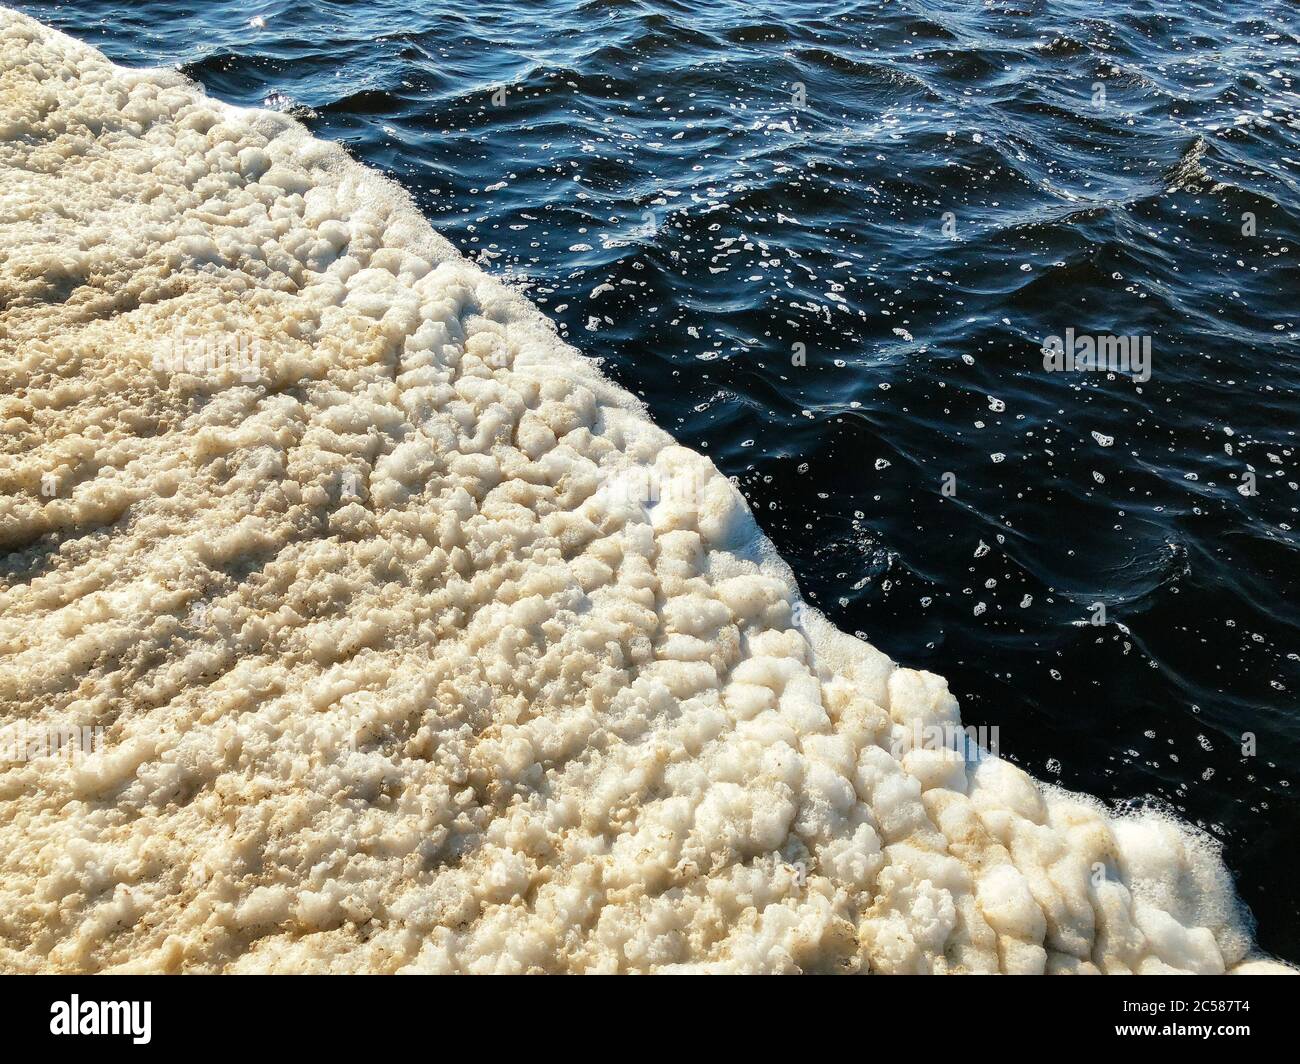 The chemistry behind sea foam